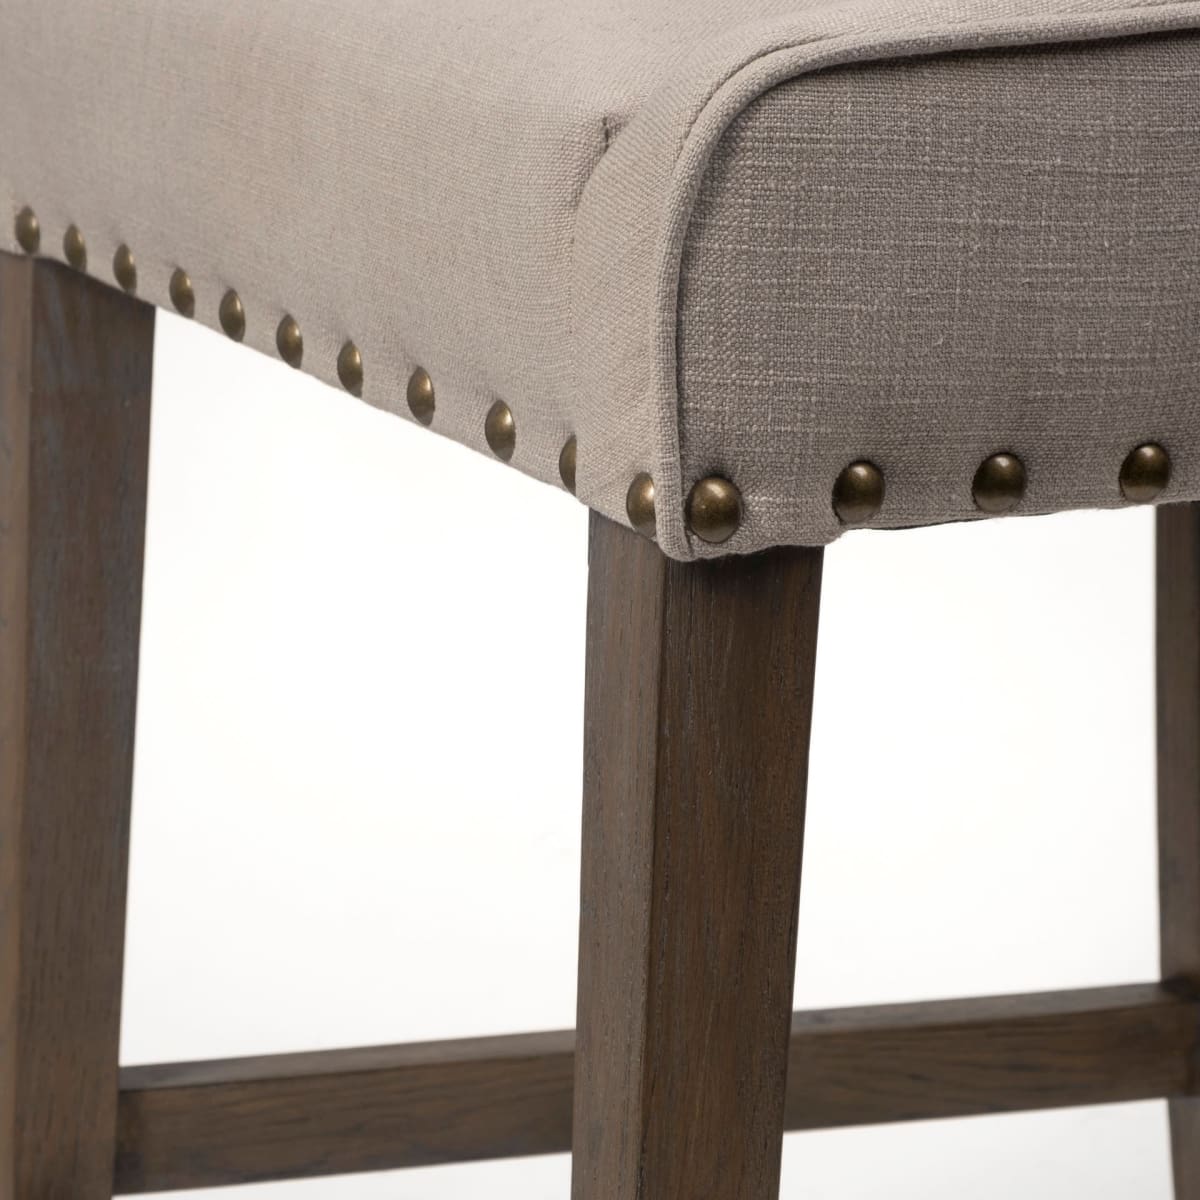 Kensington Bar Counter Stool Beige Fabric | Brown Wood - bar-stools